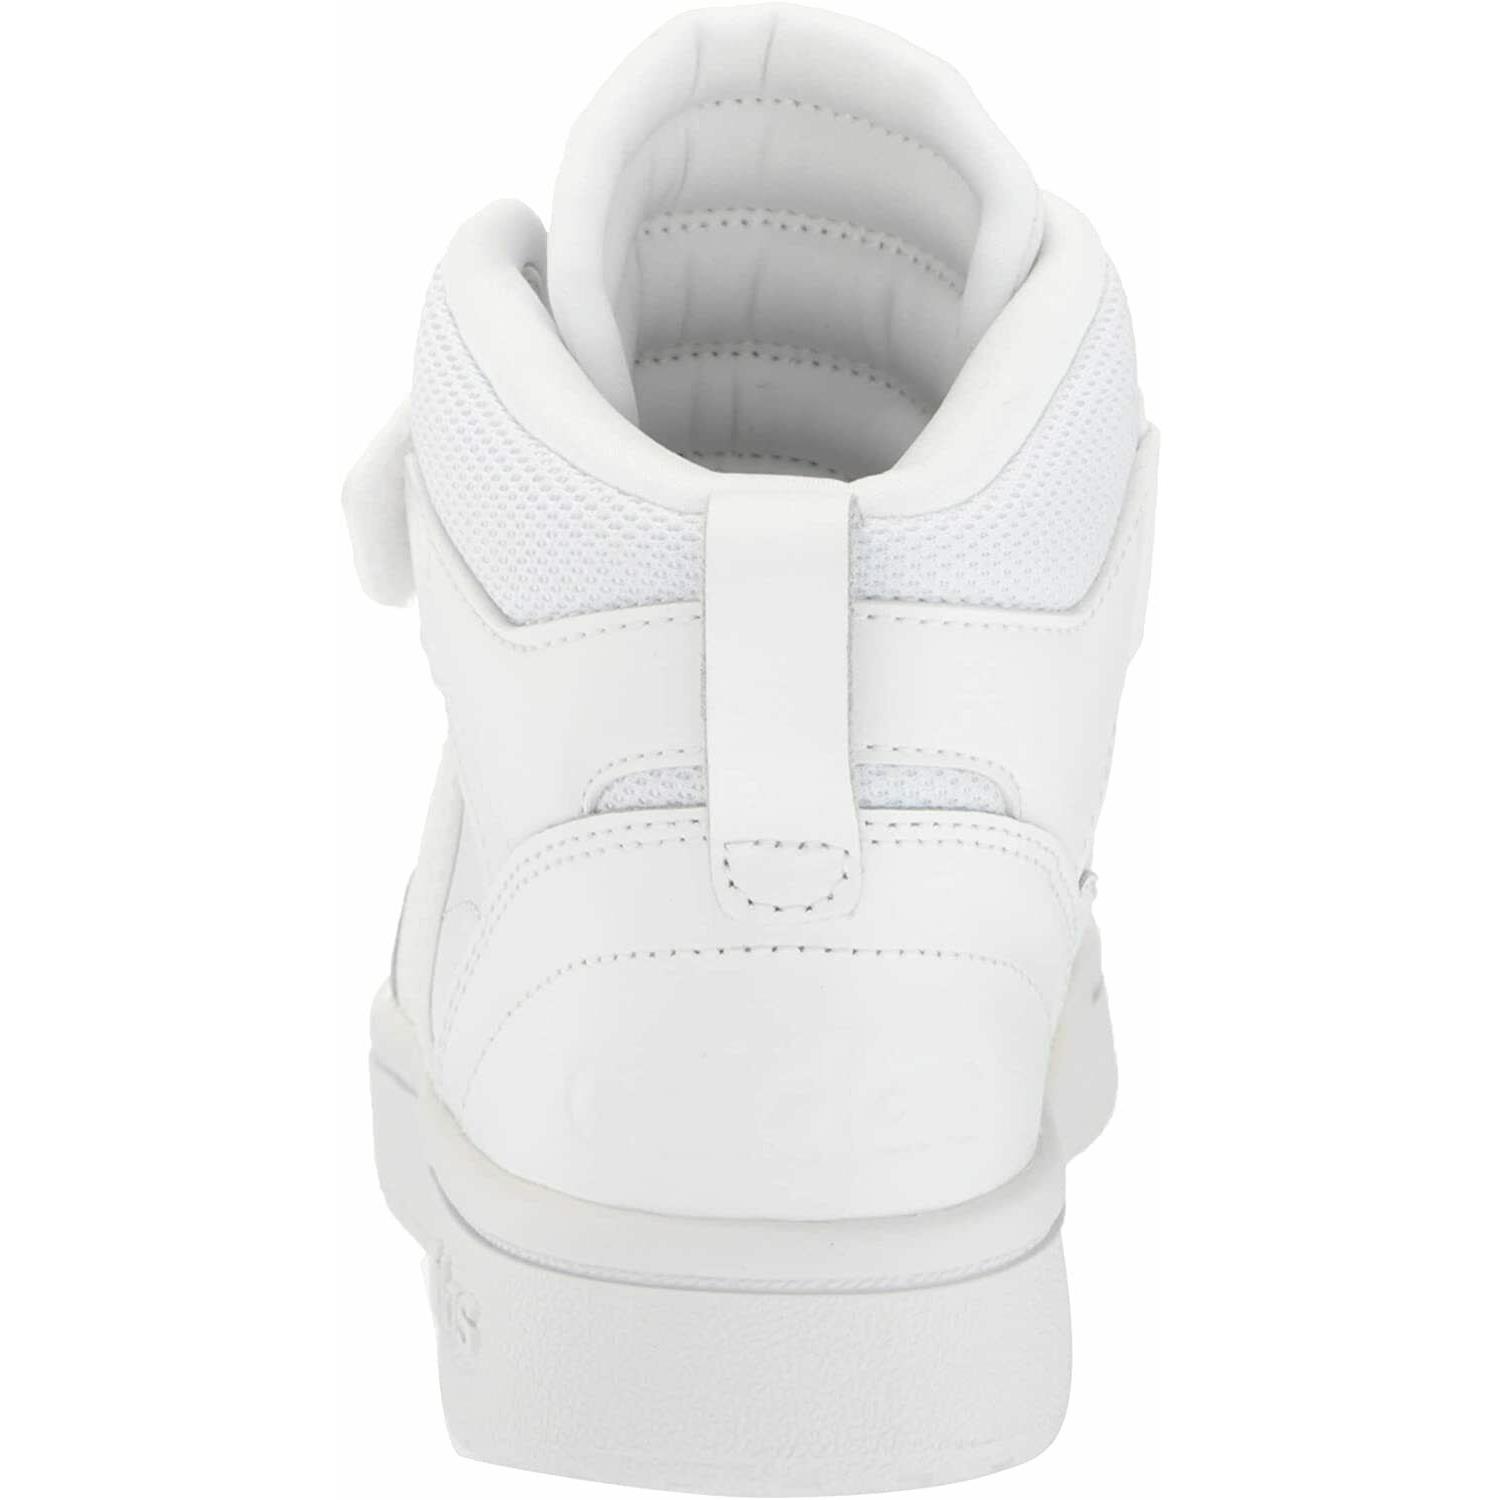 Adidas shoes POSTMOVE - White 3